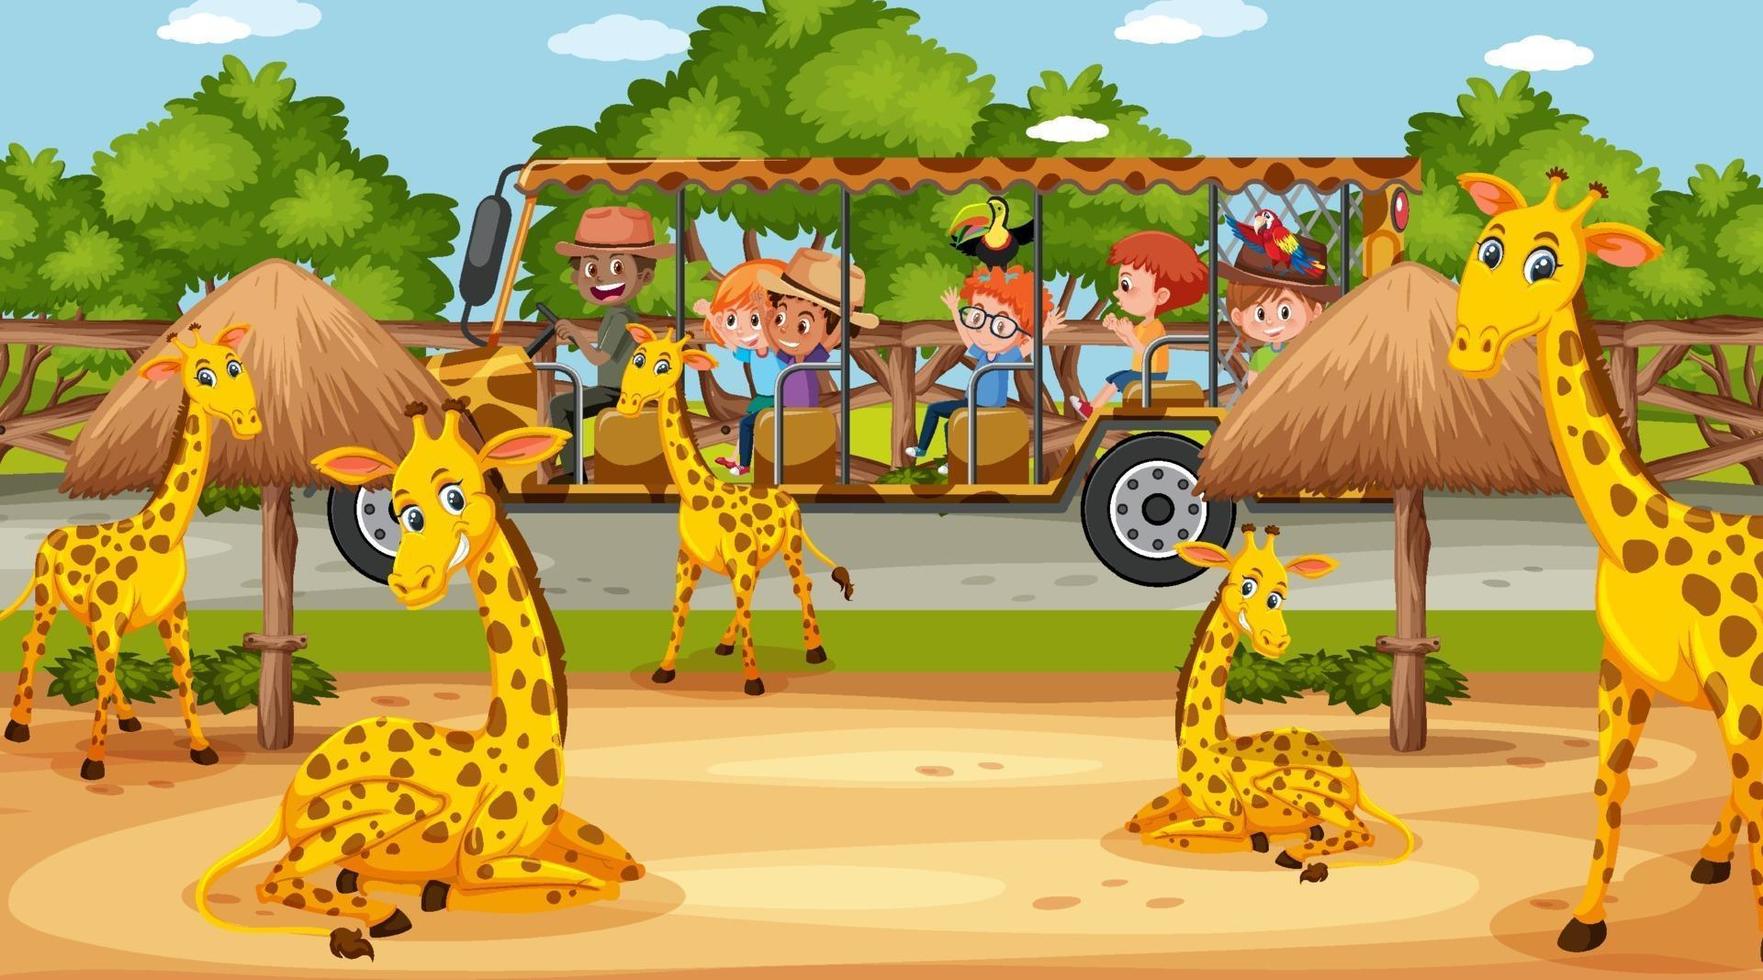 Kids tour in Safari scene with many giraffes vector